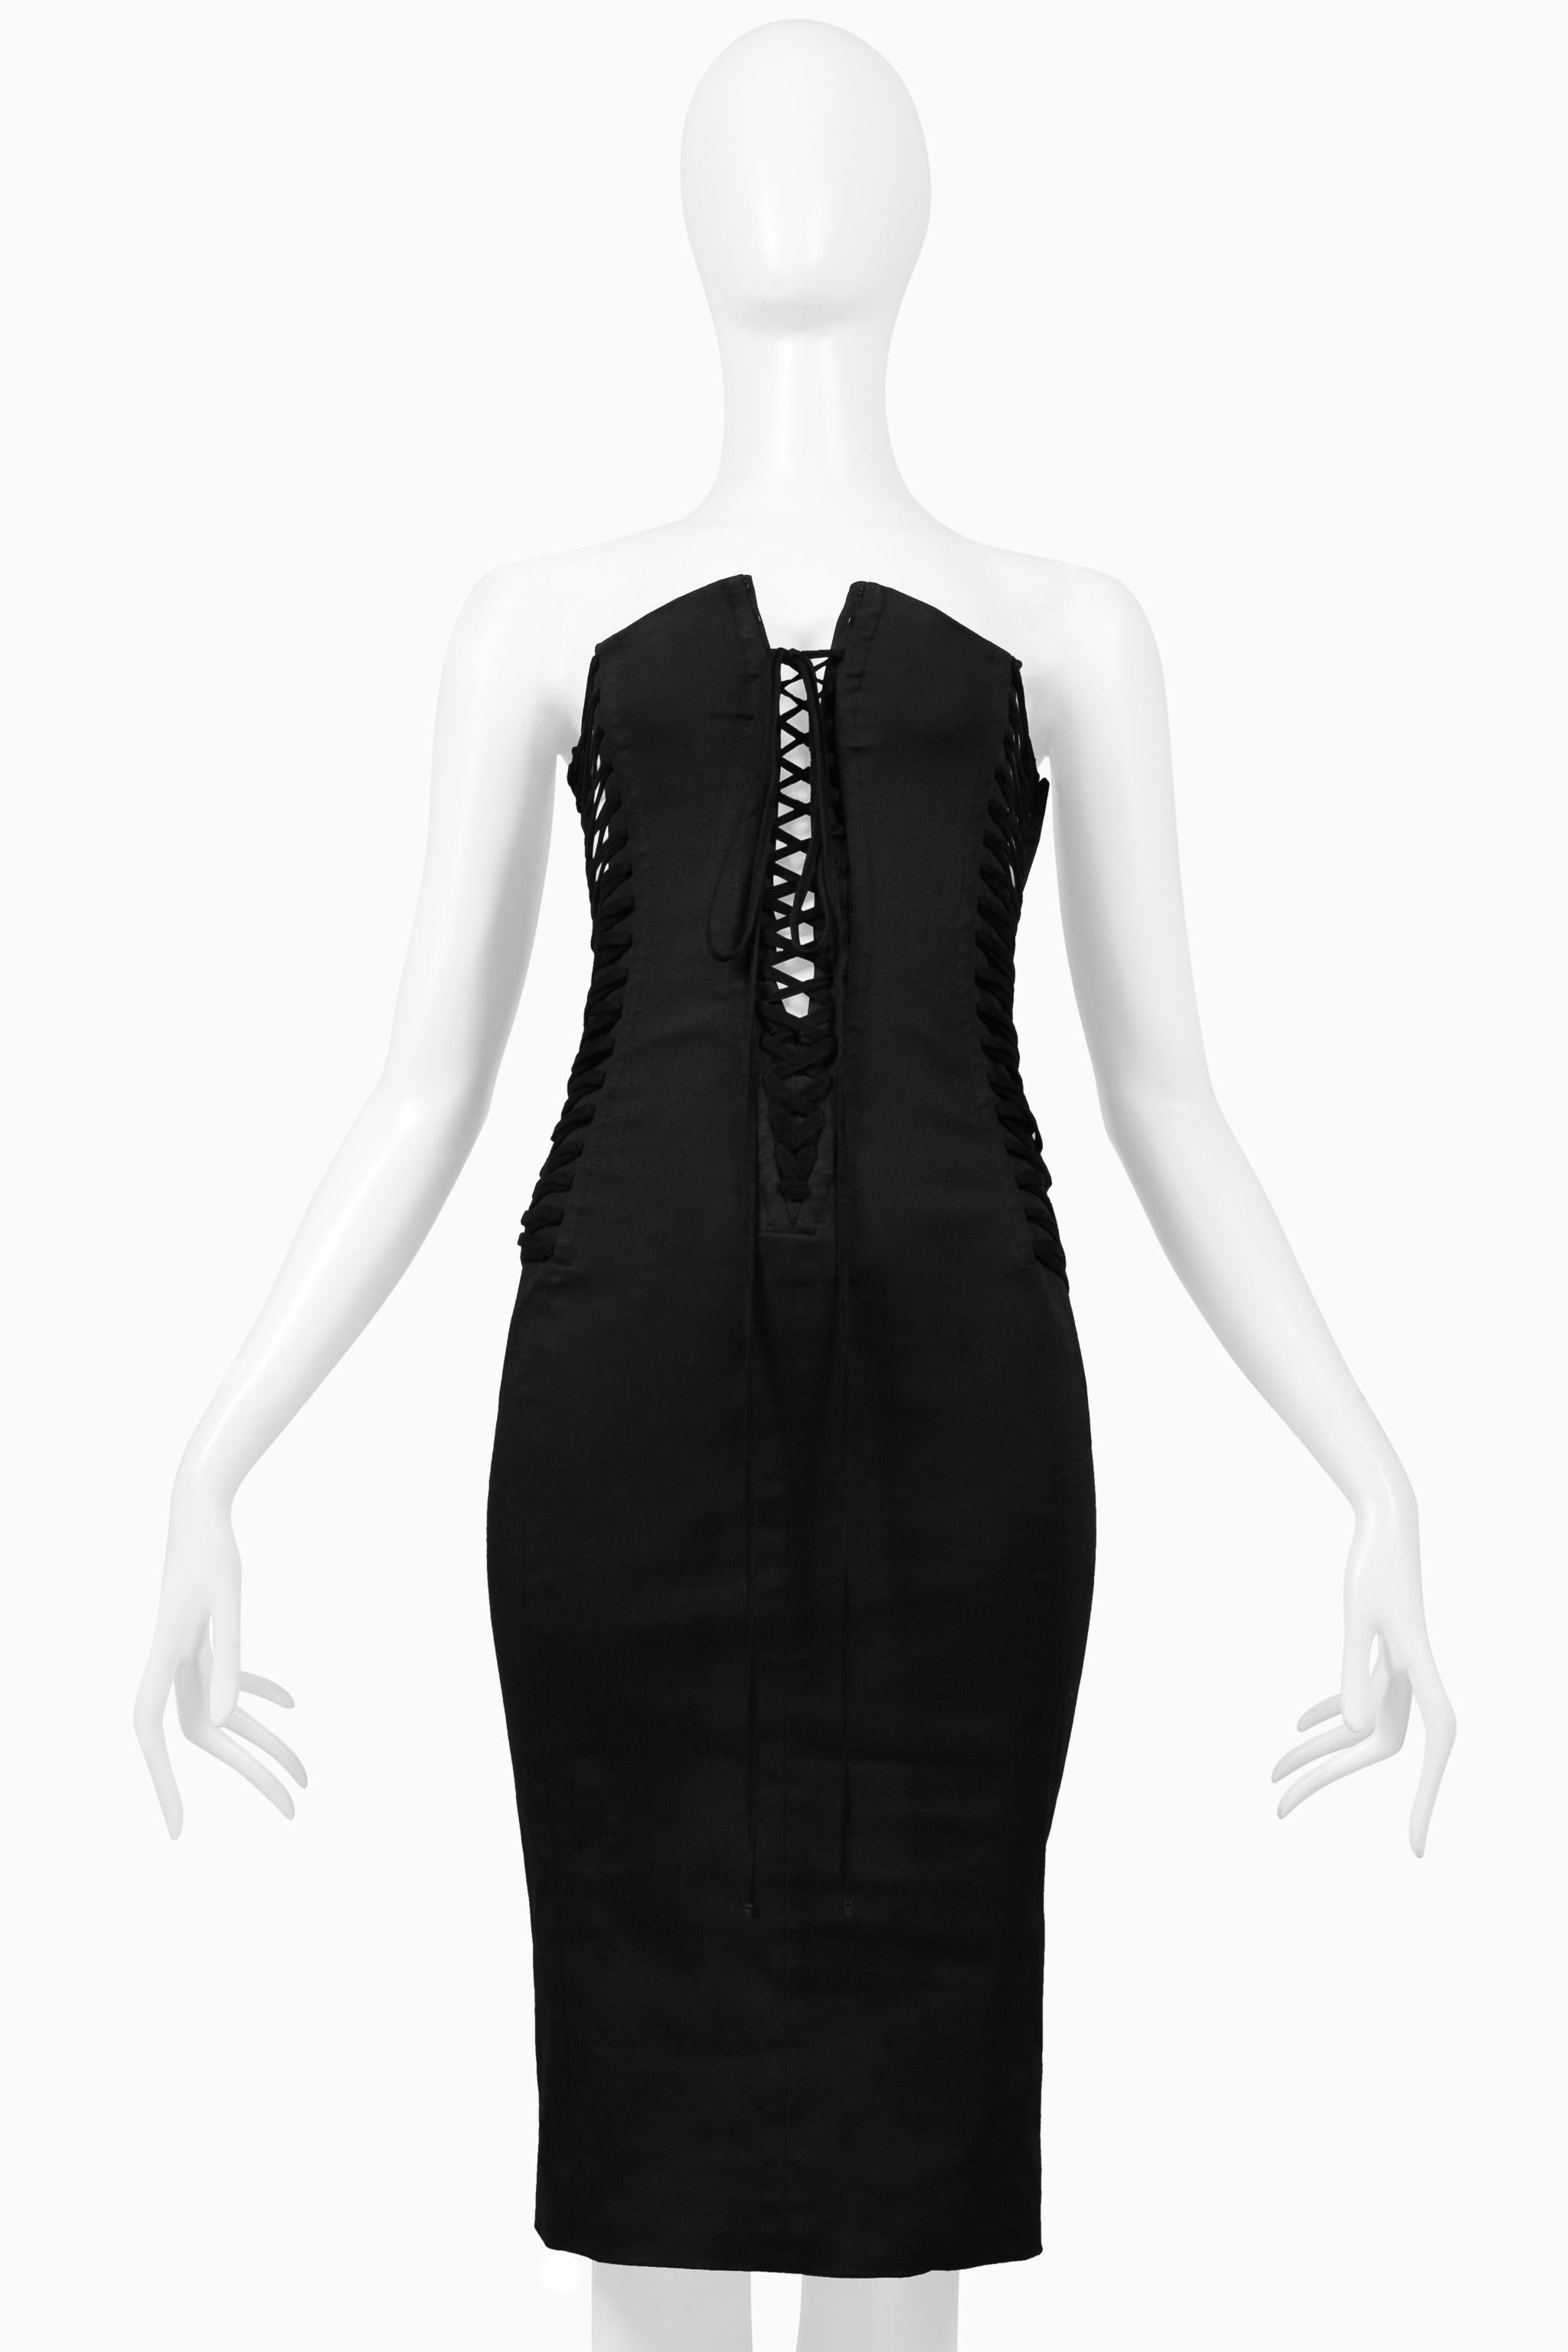 Women's Dolce & Gabbana Black Strapless Corset Dress 2002 For Sale